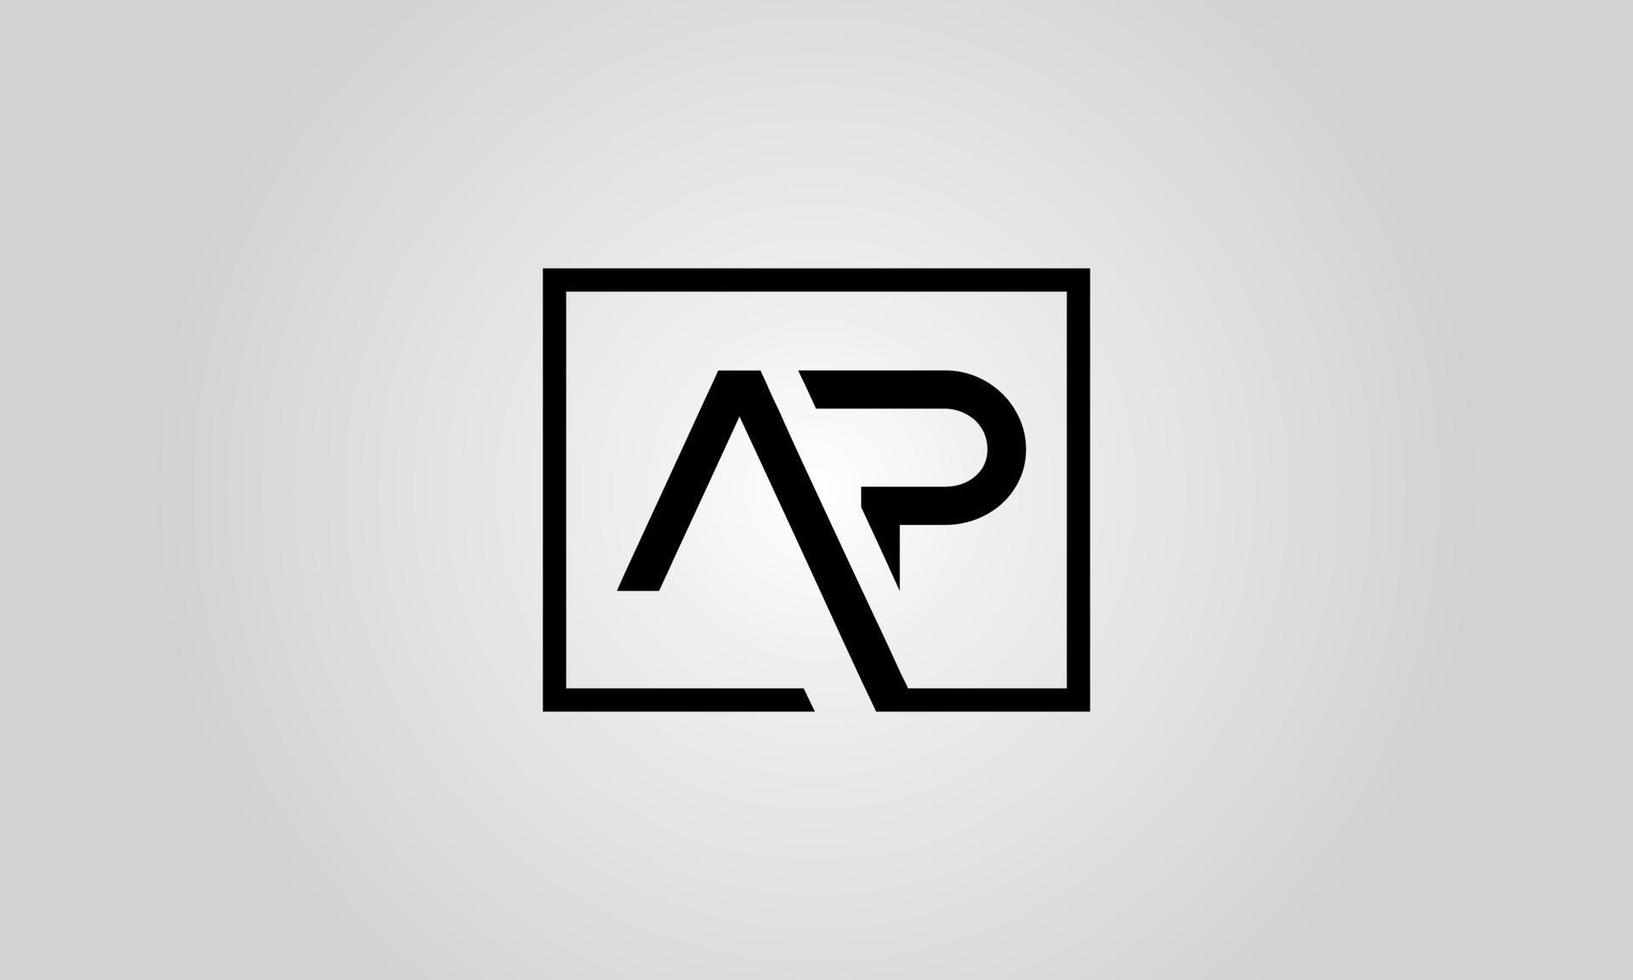 design de logotipo ap. modelo de vetor livre de design de ícone de logotipo de letra inicial ap.